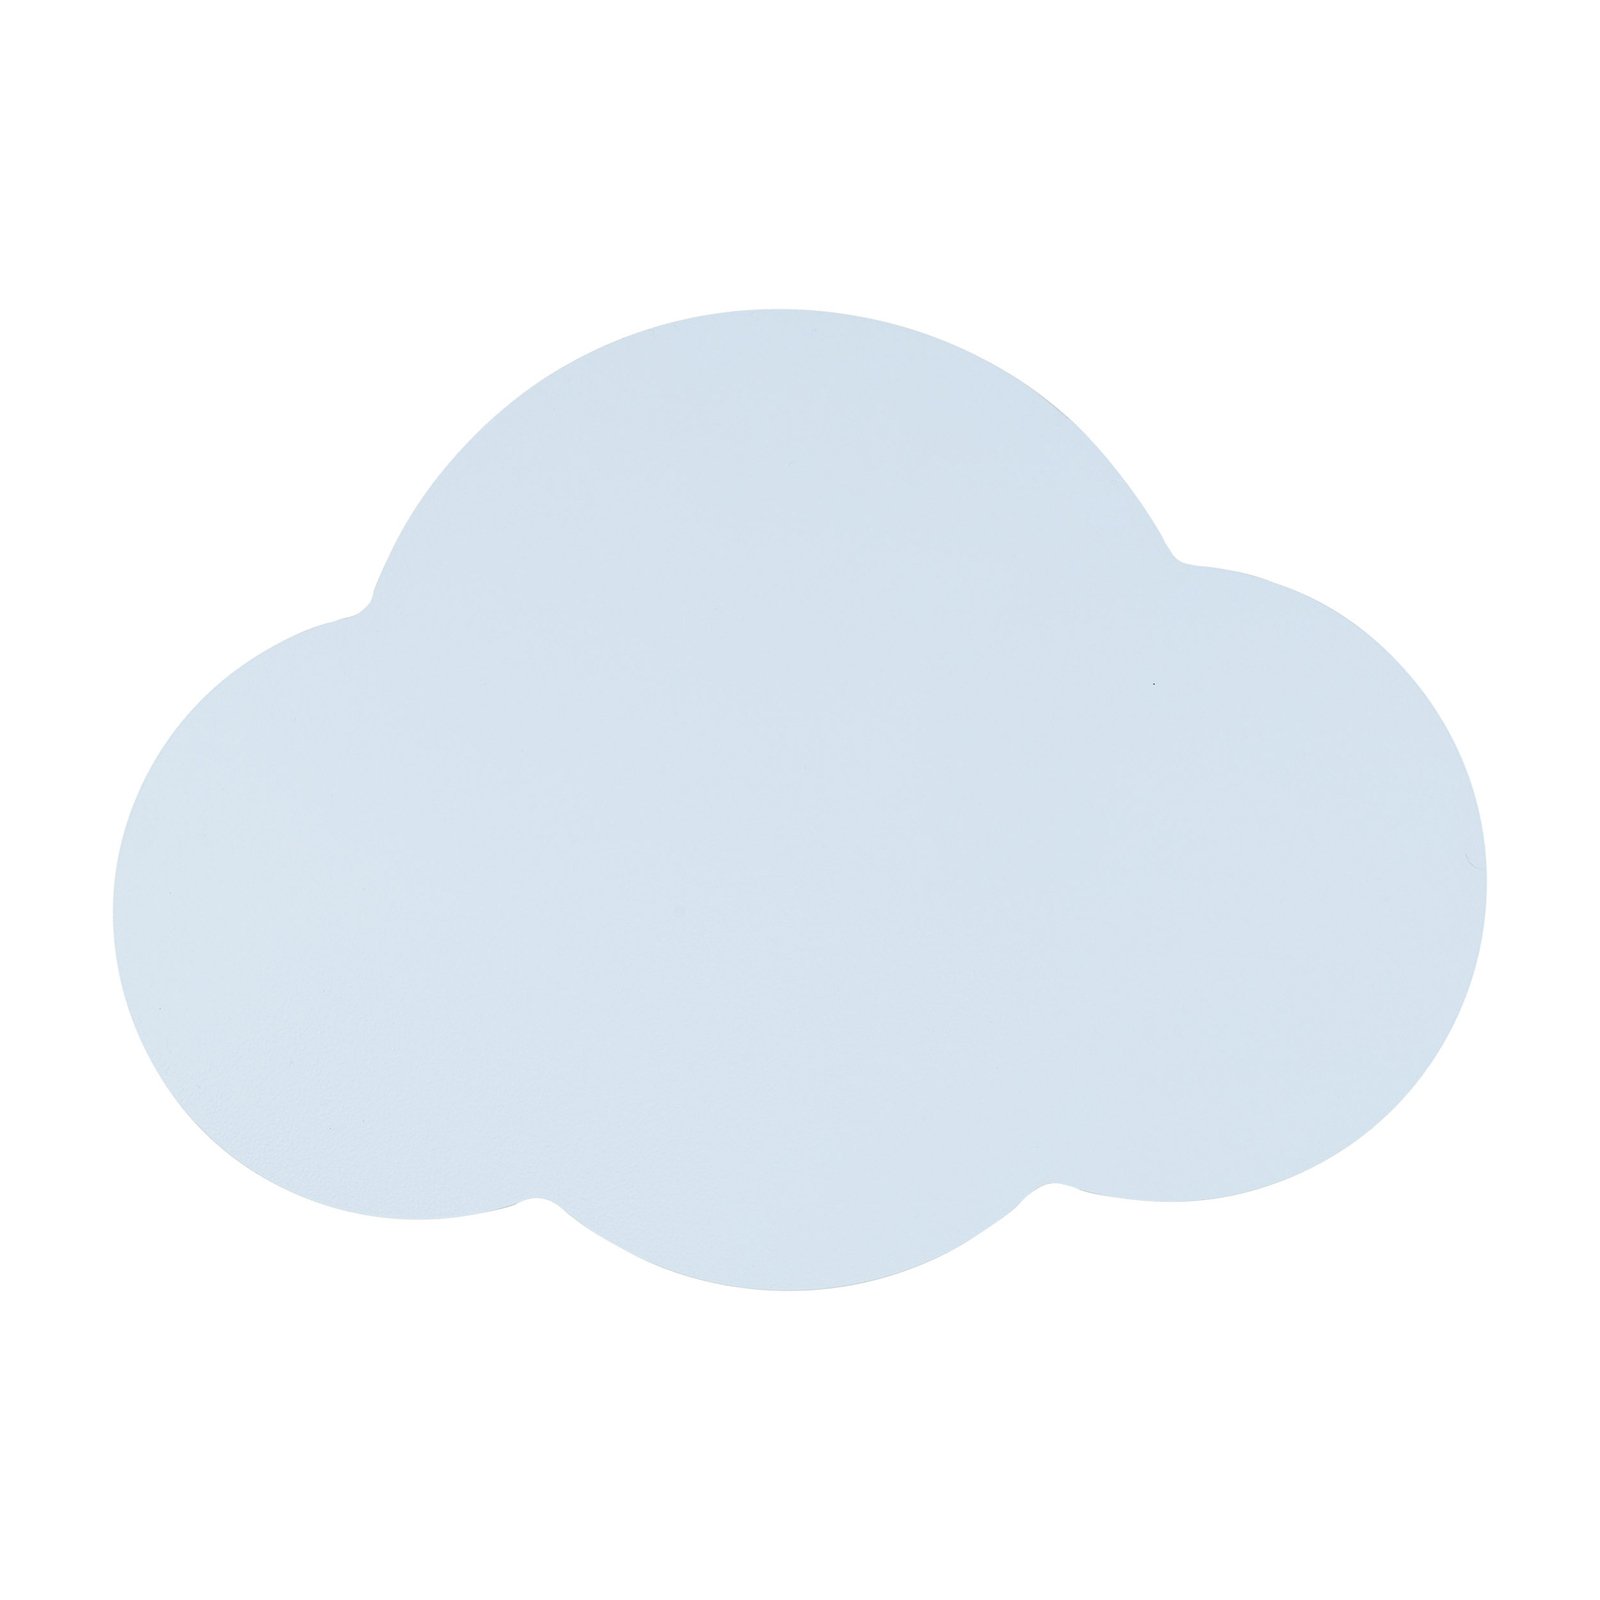 Wandlampe Cloud, blau, Stahl, indirektes Licht, 38 x 27 cm